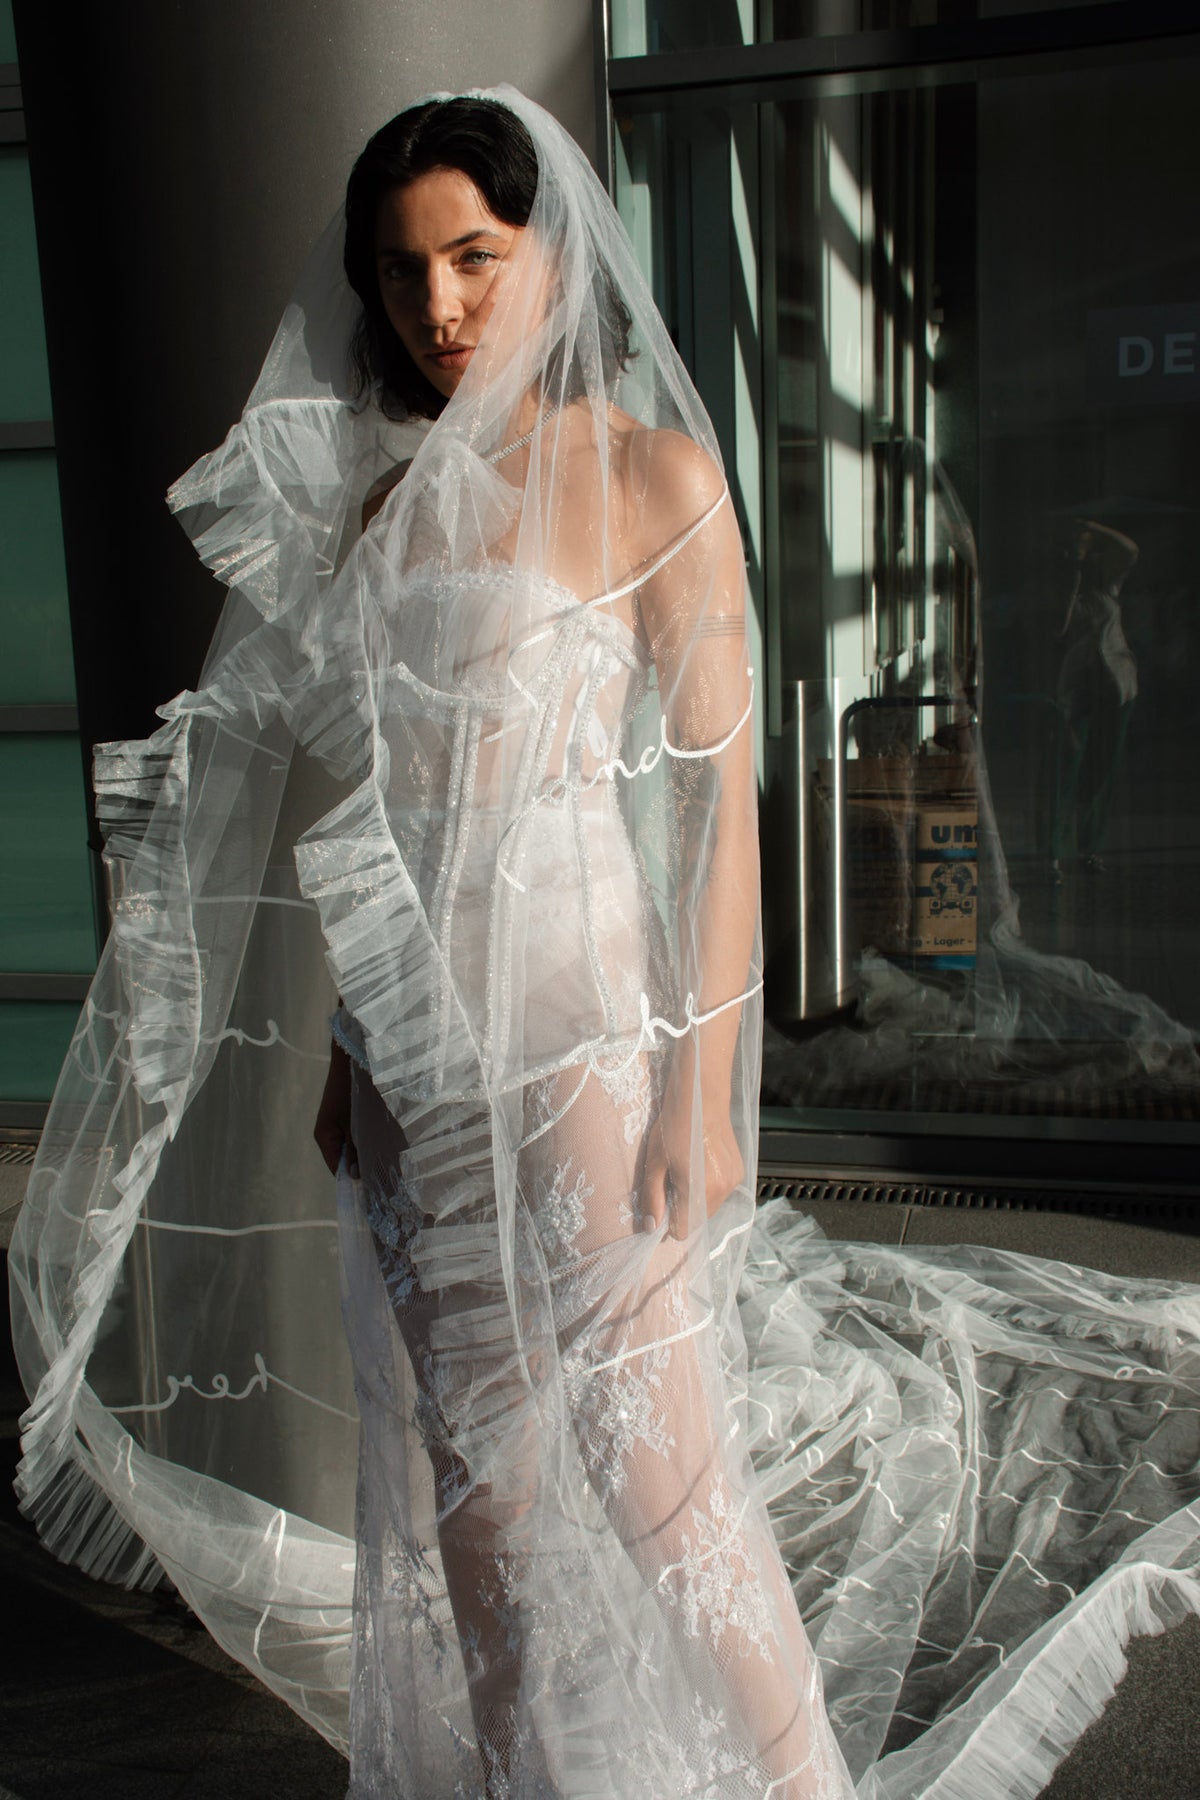 Embroidered wedding/bridal veil - LOVE POEM